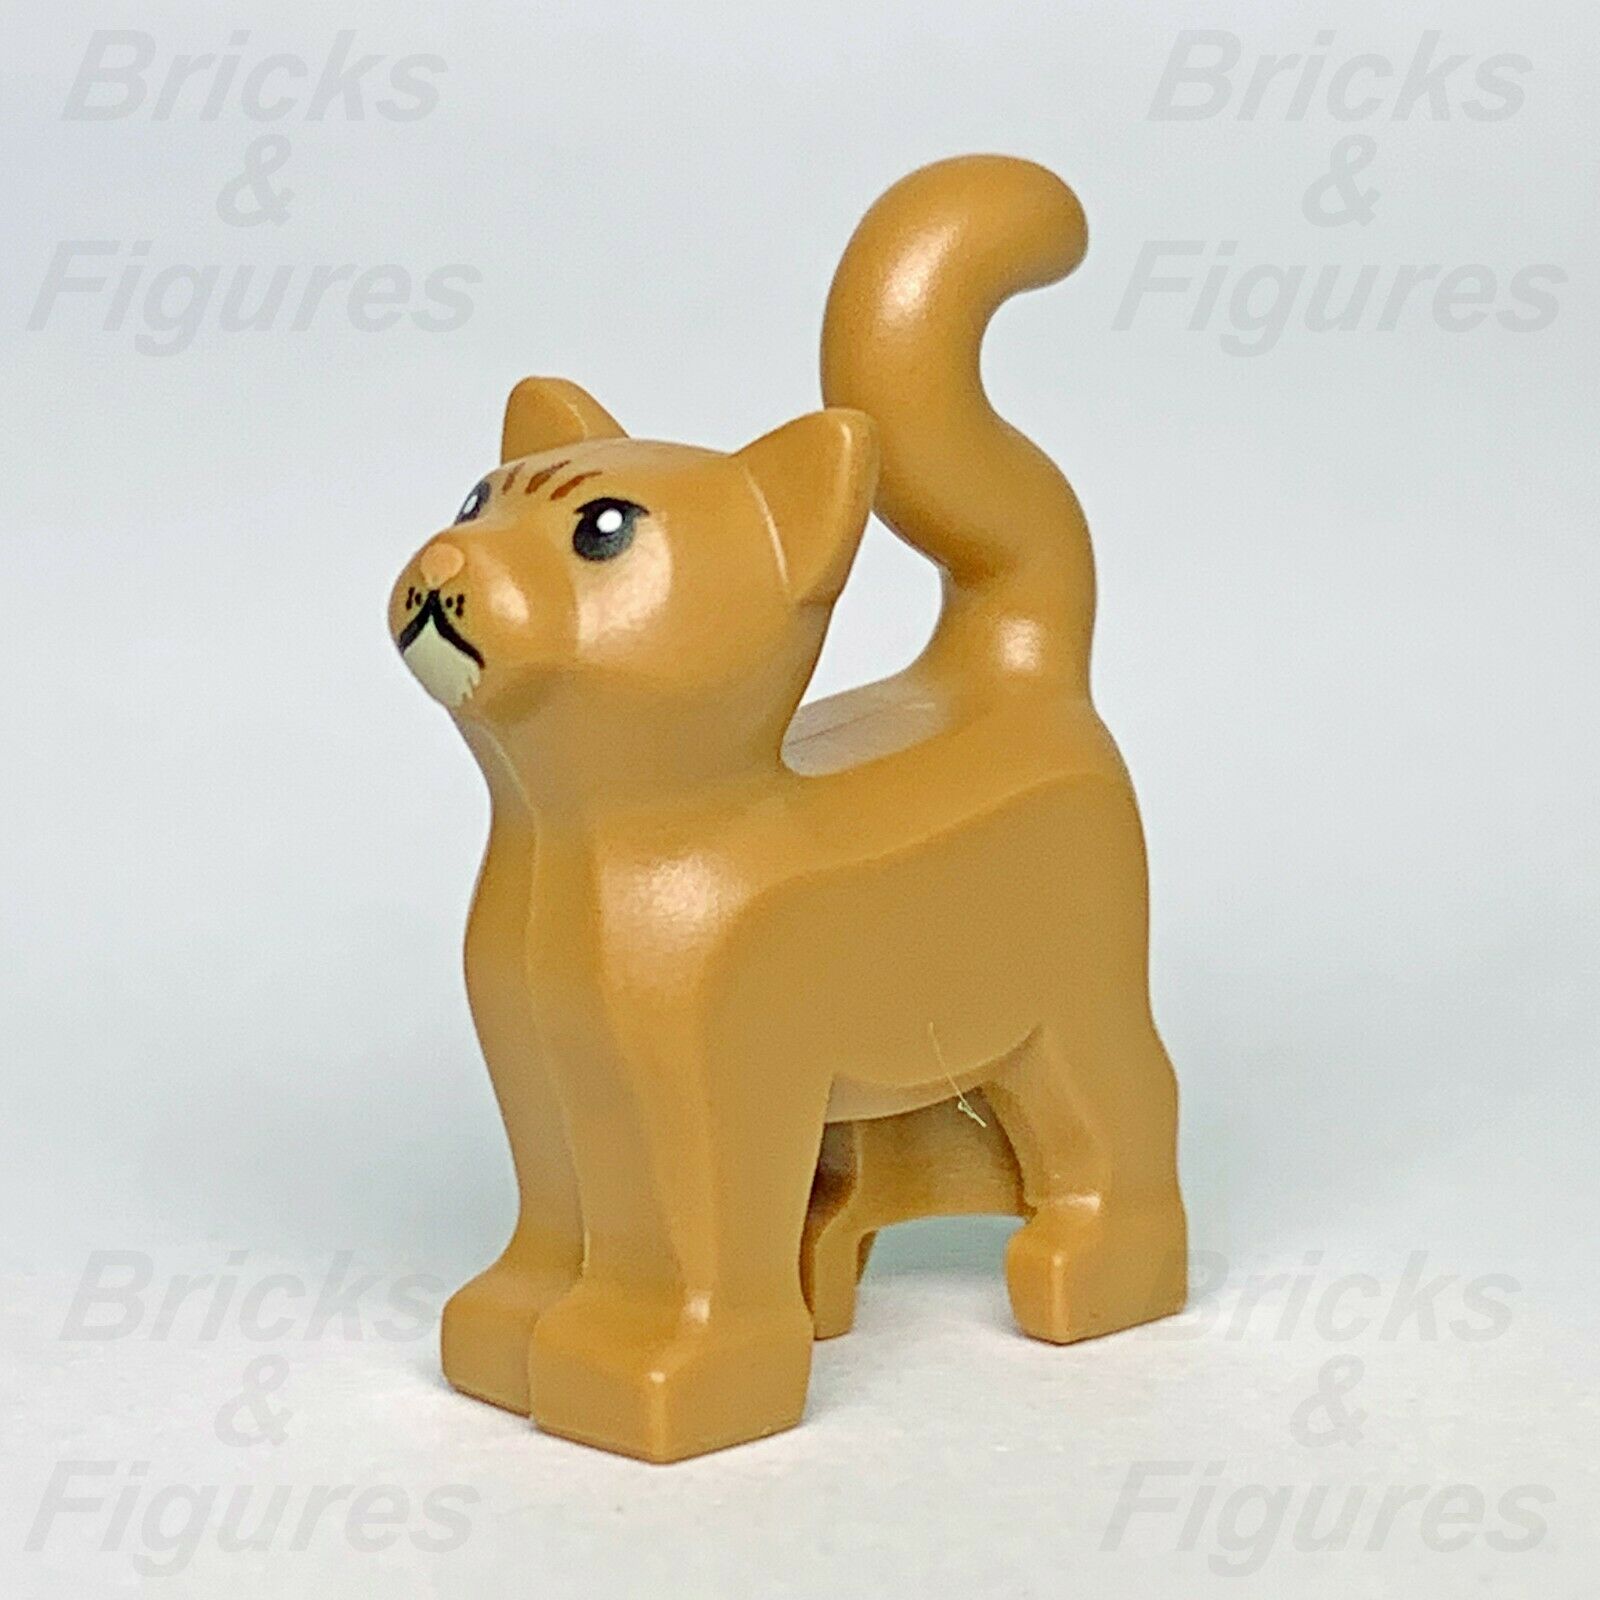 New Harry Potter LEGO Crookshanks Hermion Granger's Pet Cat Animal Part 71022 - Bricks & Figures